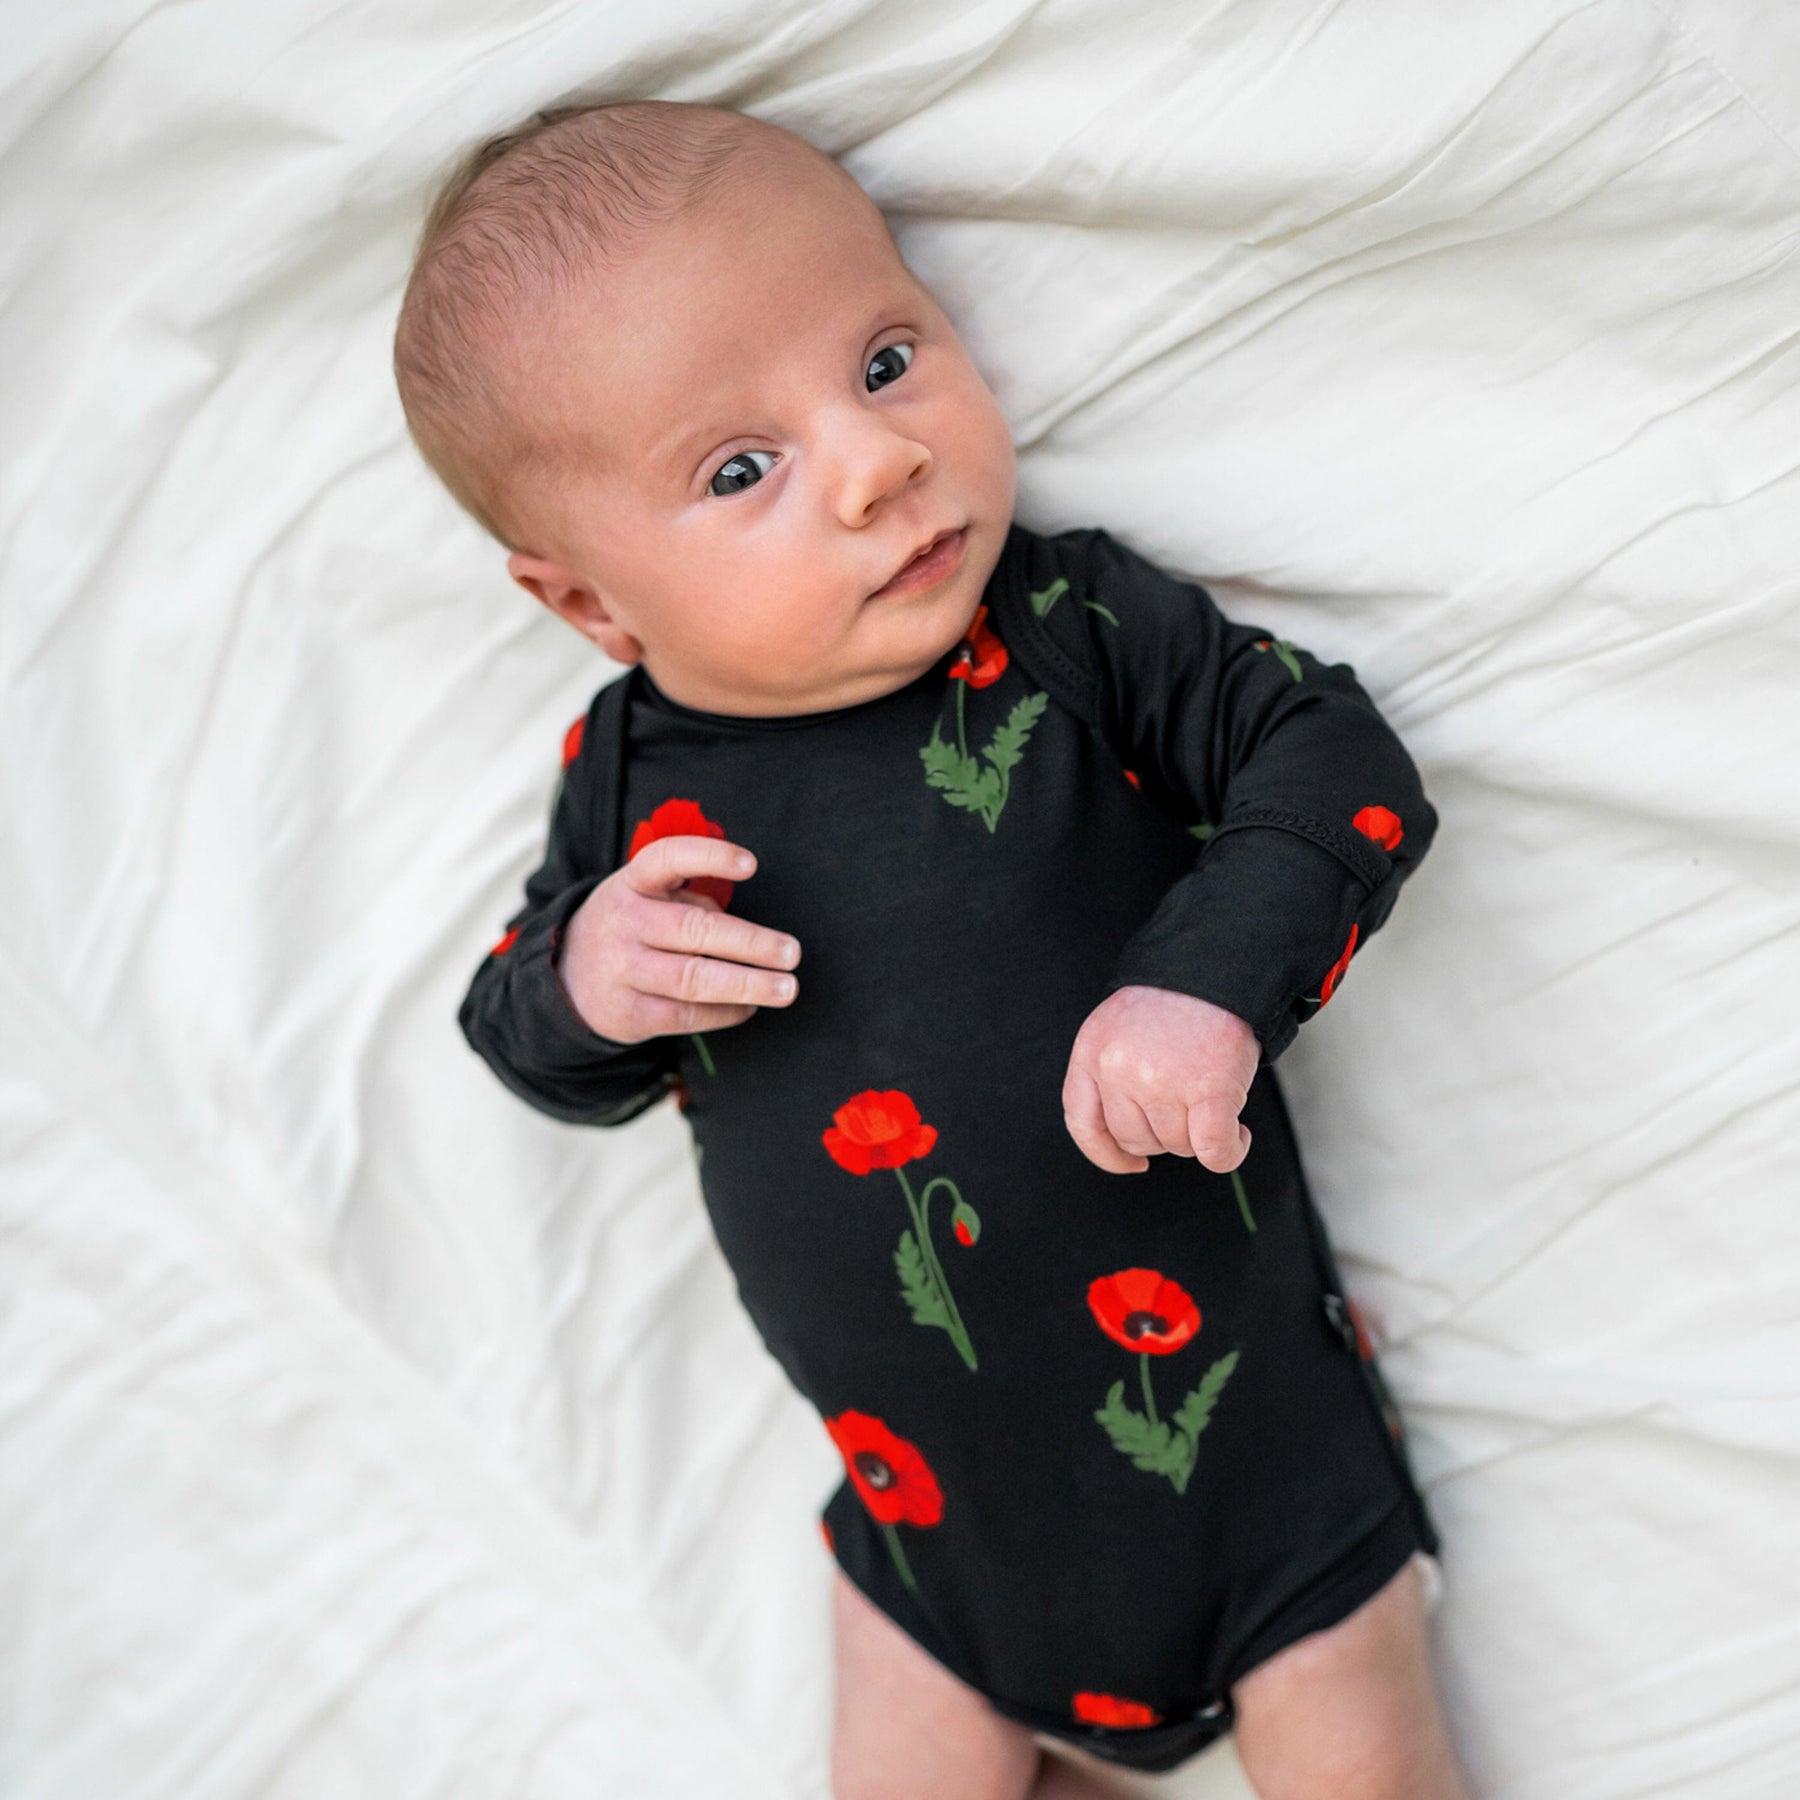 Kyte Baby Long Sleeve Bodysuits Long Sleeve Bodysuit in Midnight Poppies